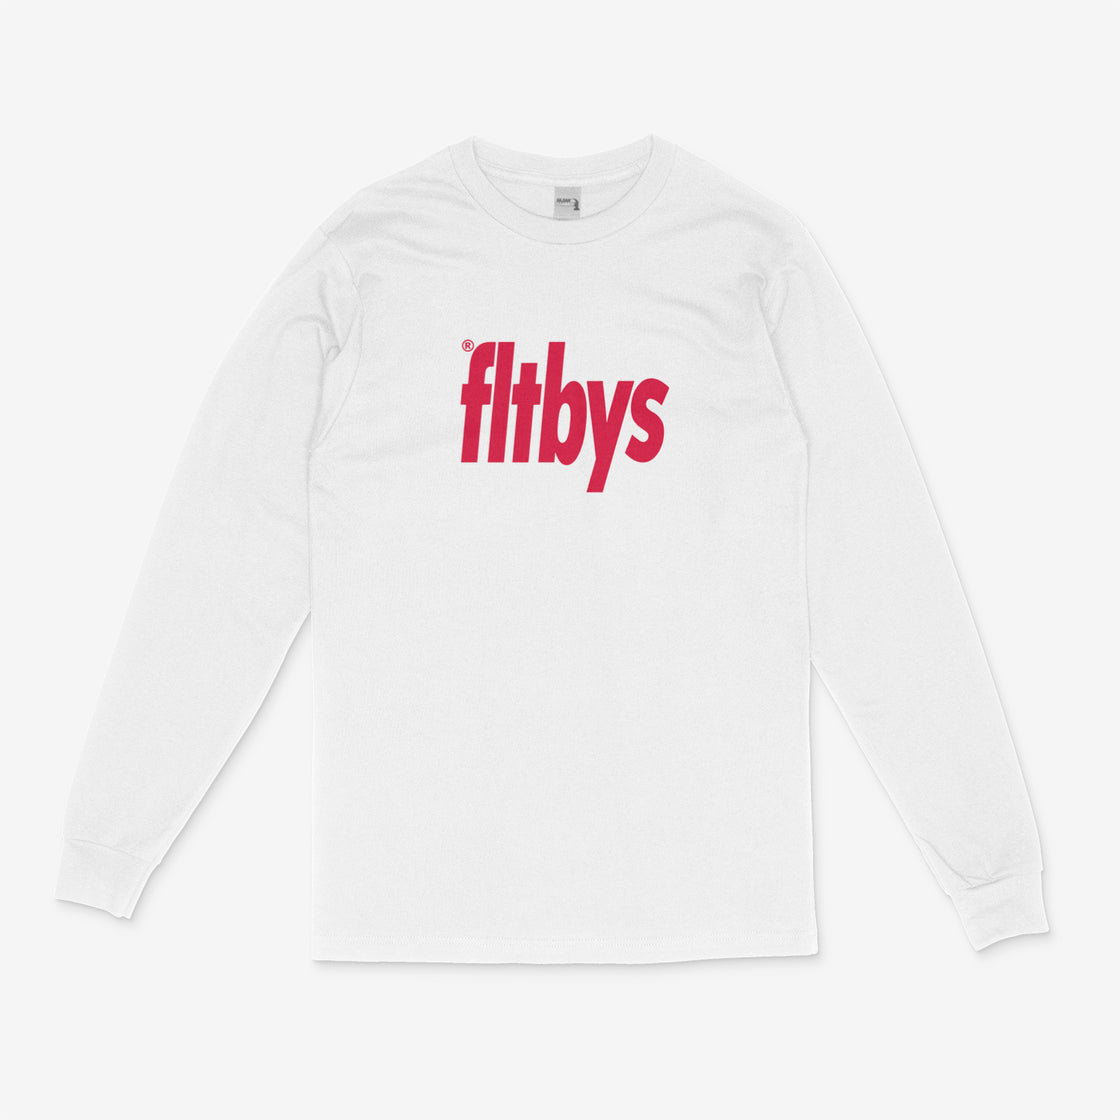 FLTBYS Classic Long Sleeve - White